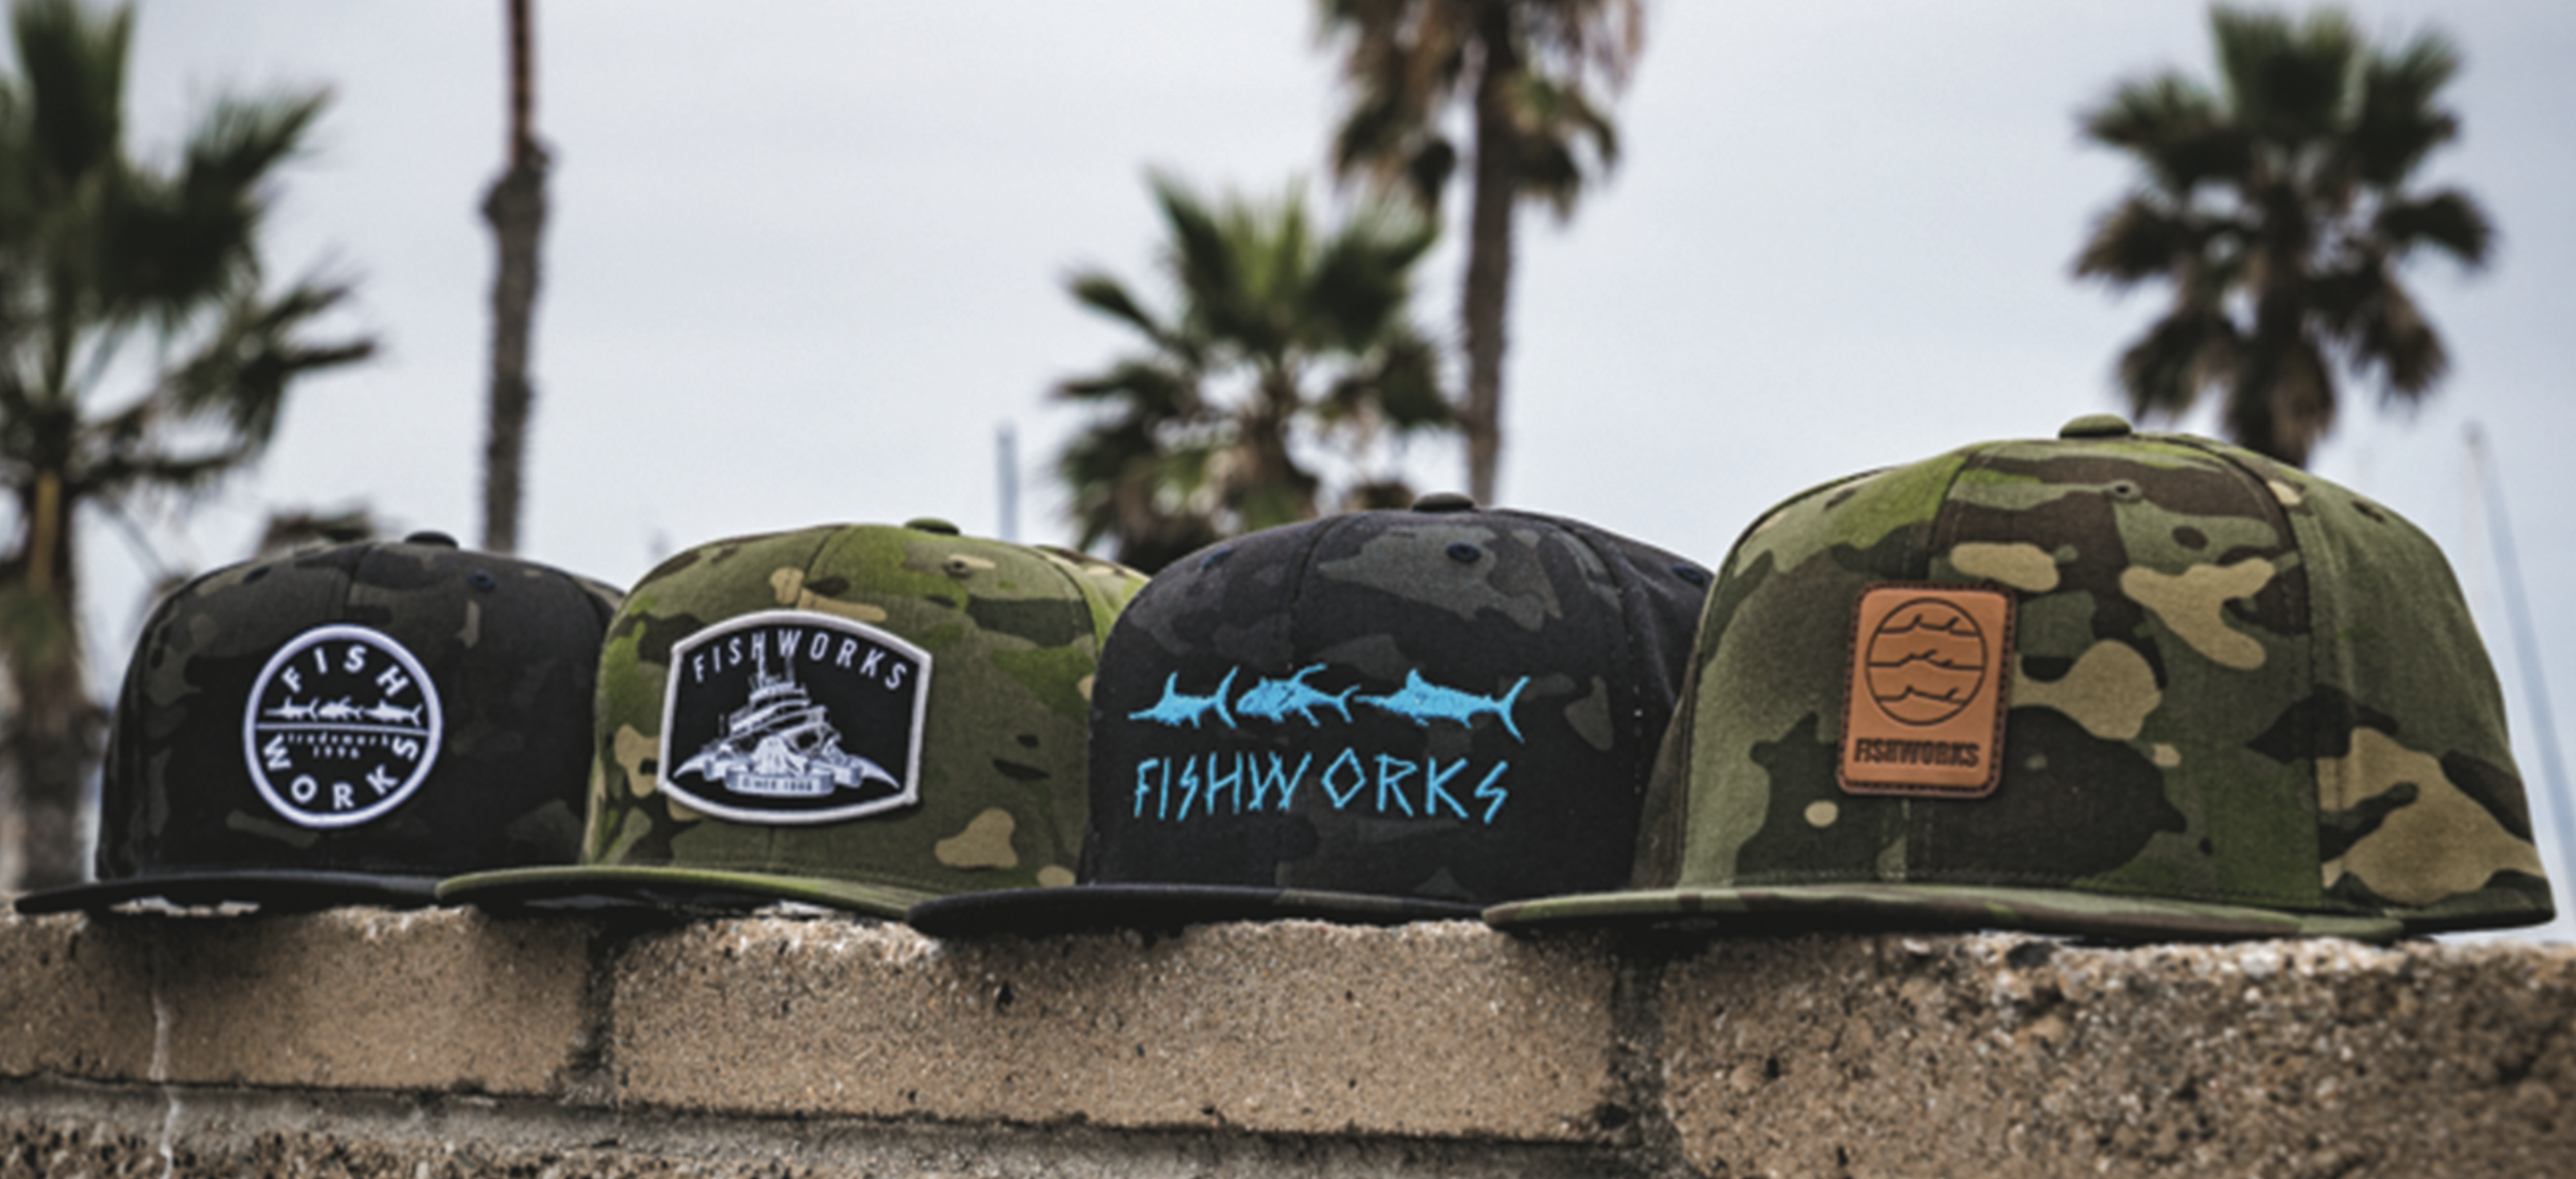 Snapback Fishing Hats